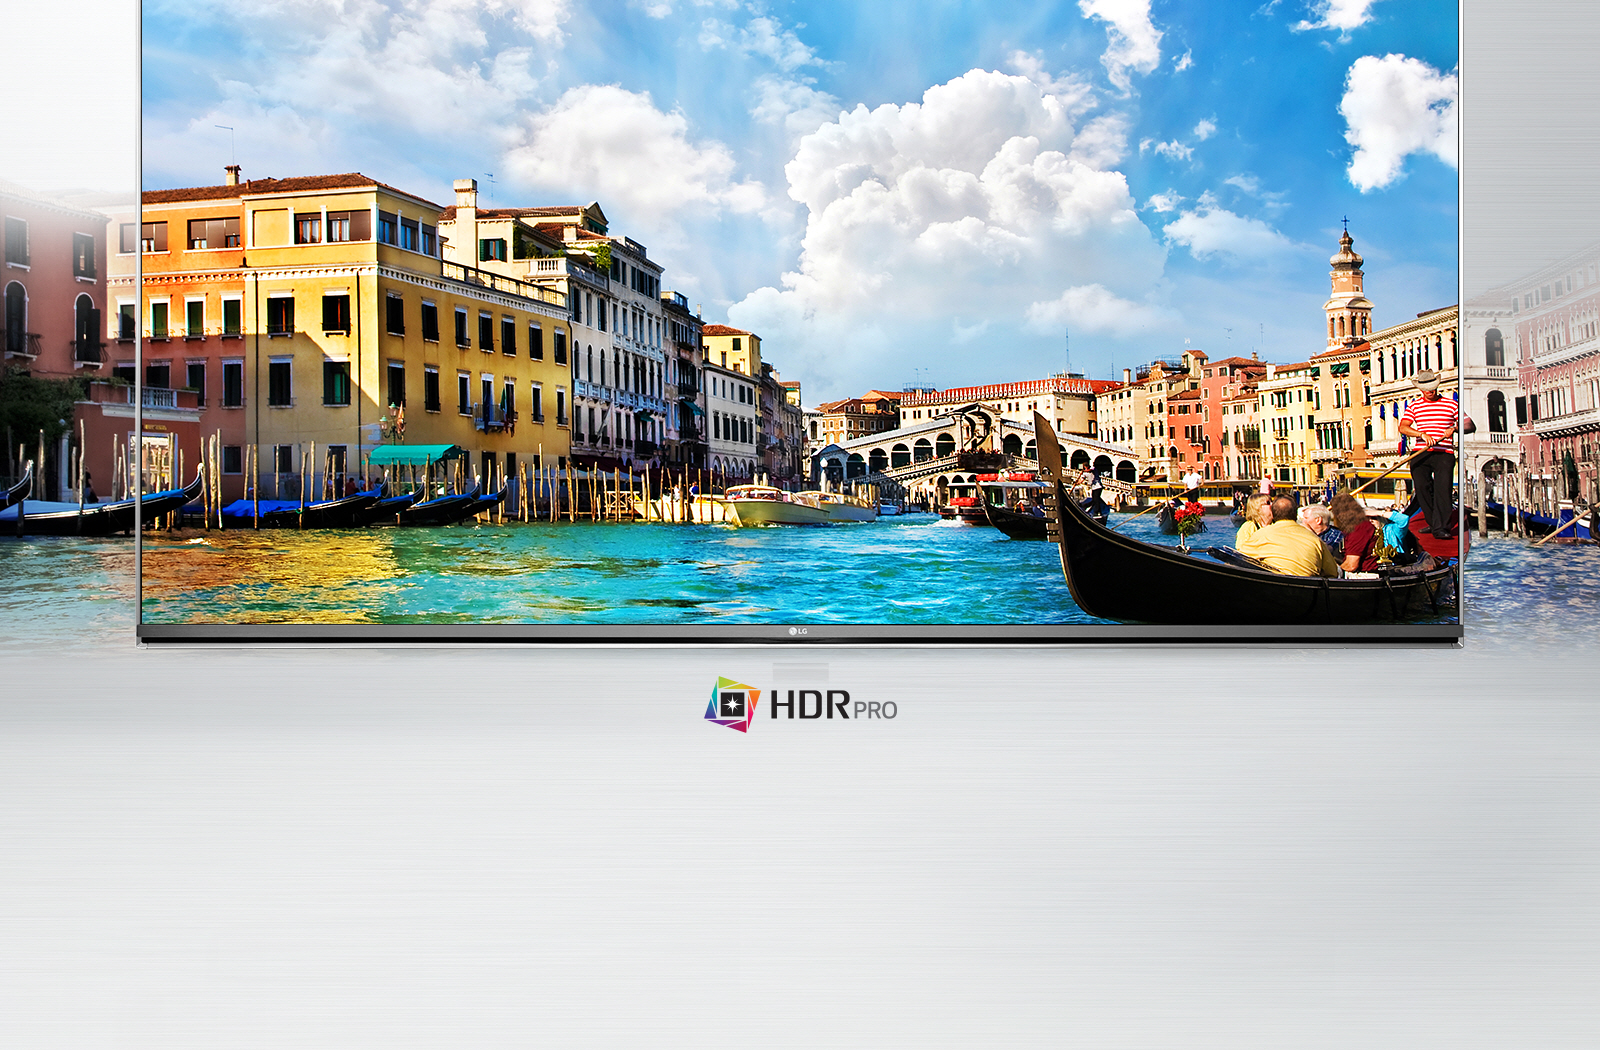 تلویزیون 4K هوشمند ال جی LED TV 4K Smart LG 49UH65200GI - سایز 49 اینچ